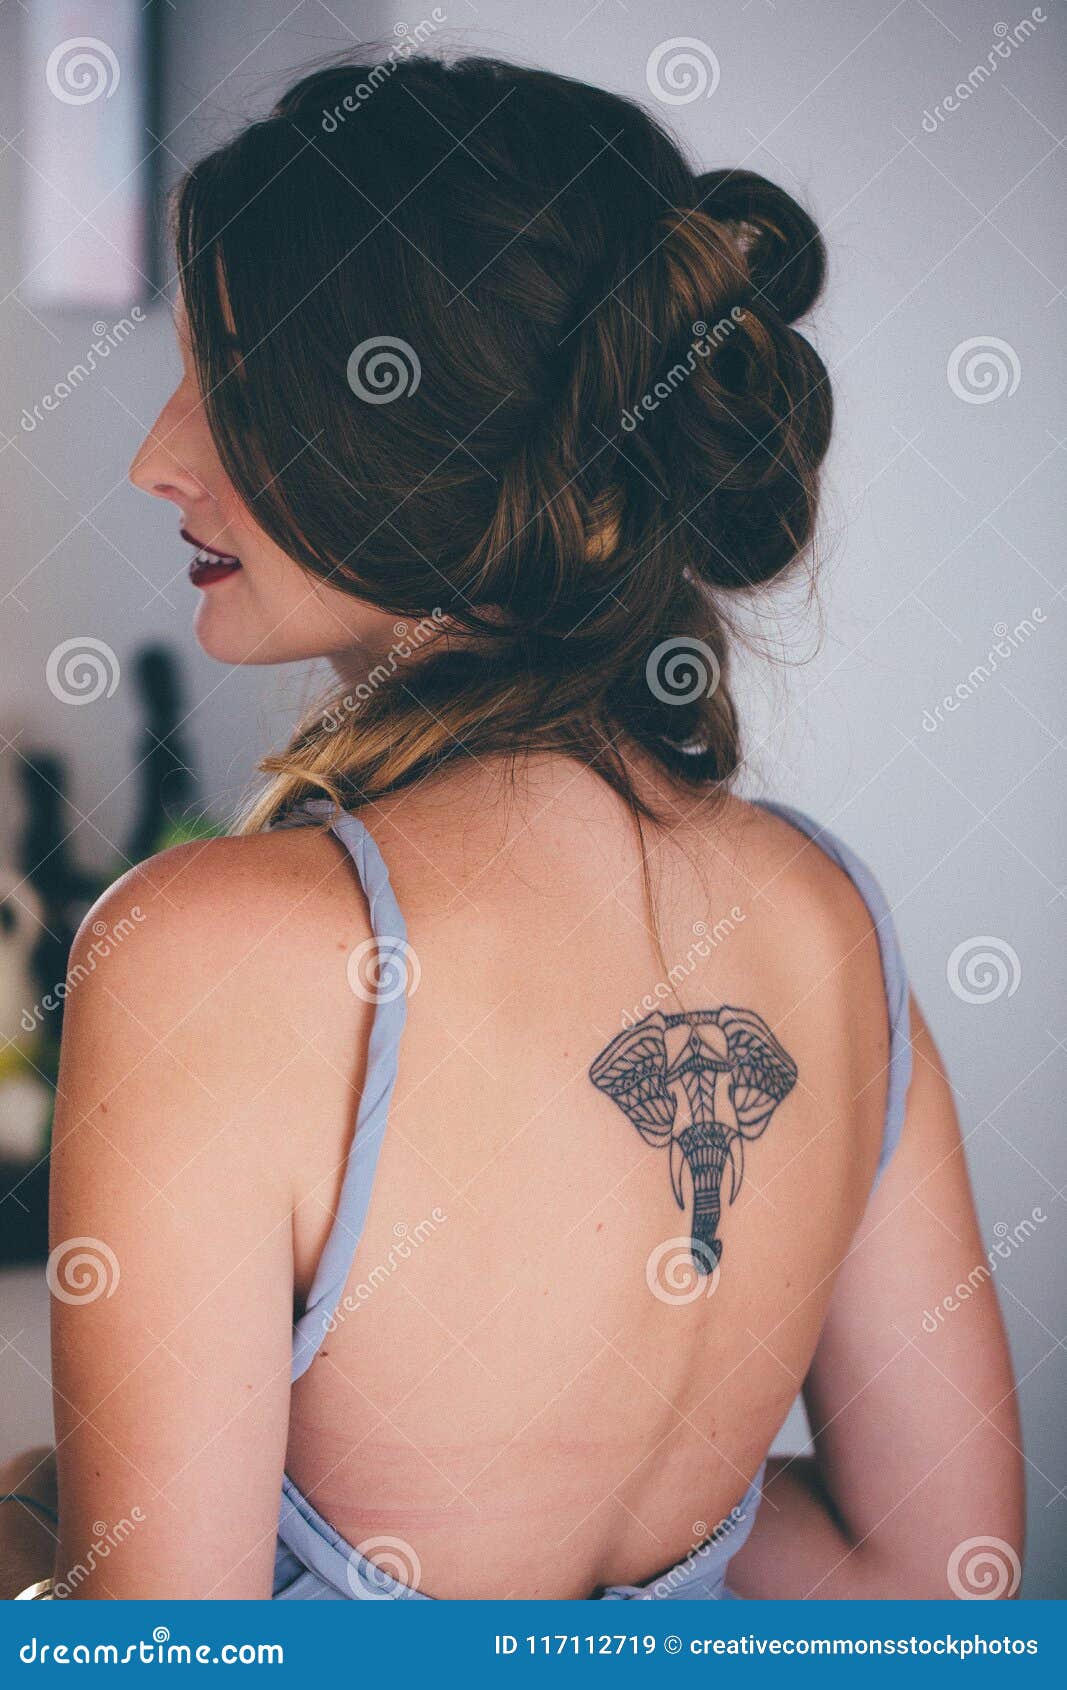 Explore the 30 Best Elephant Tattoo Ideas 2021  Tattoodo